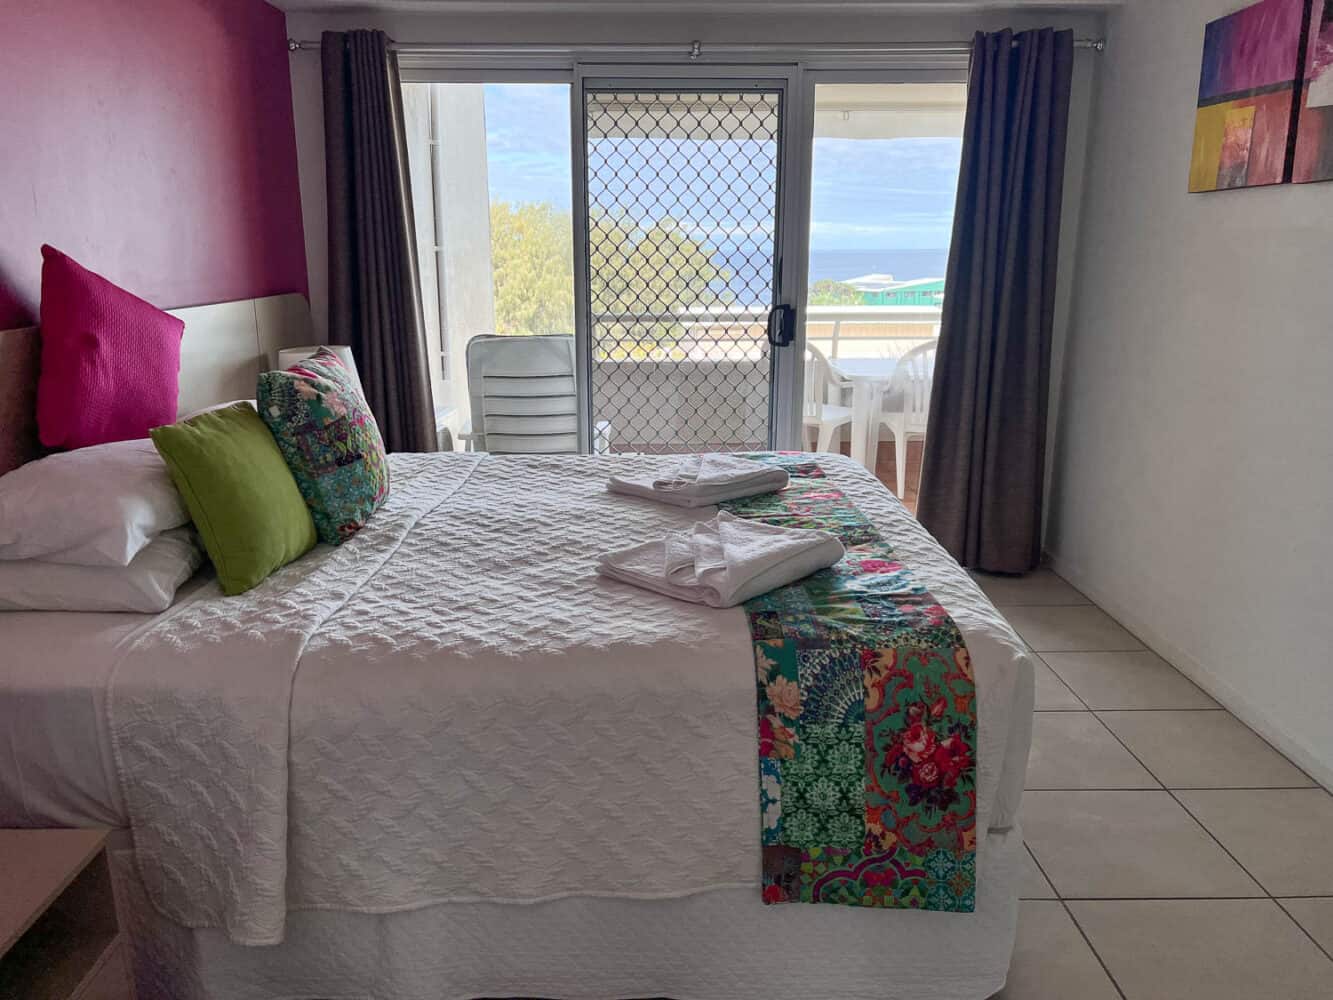 Double bedroom with a sea view at Samarinda Jewel By the Sea, North Stradbroke, Queensland, Australia